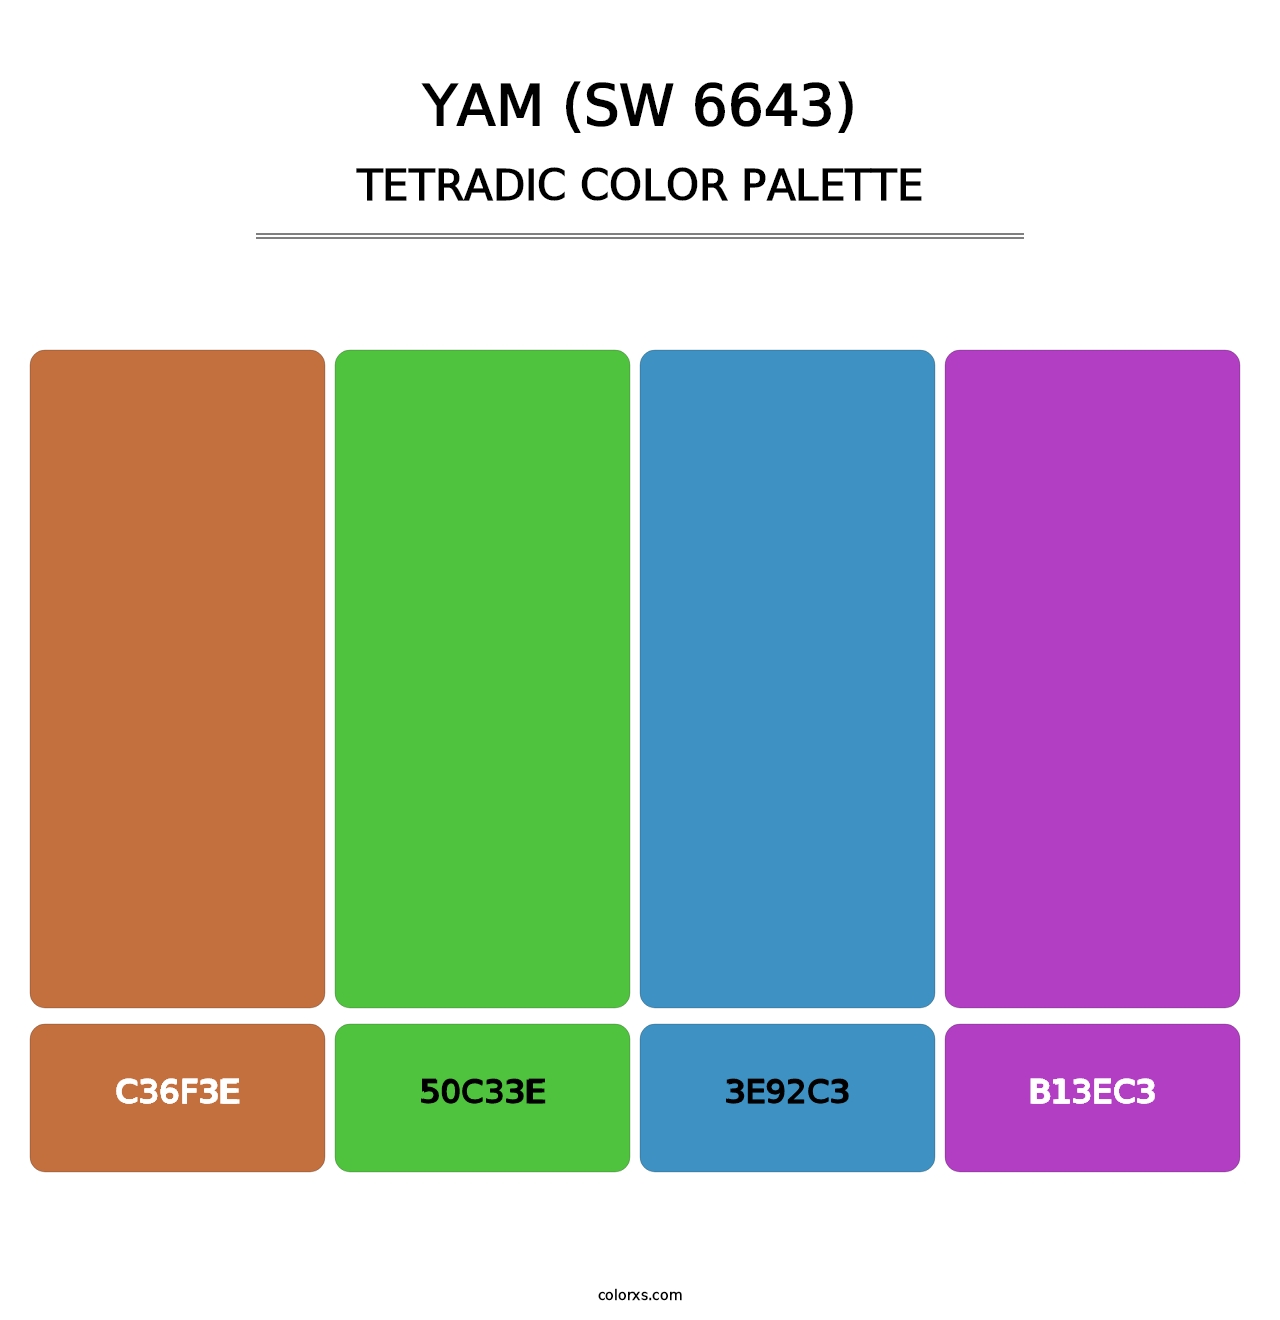 Yam (SW 6643) - Tetradic Color Palette